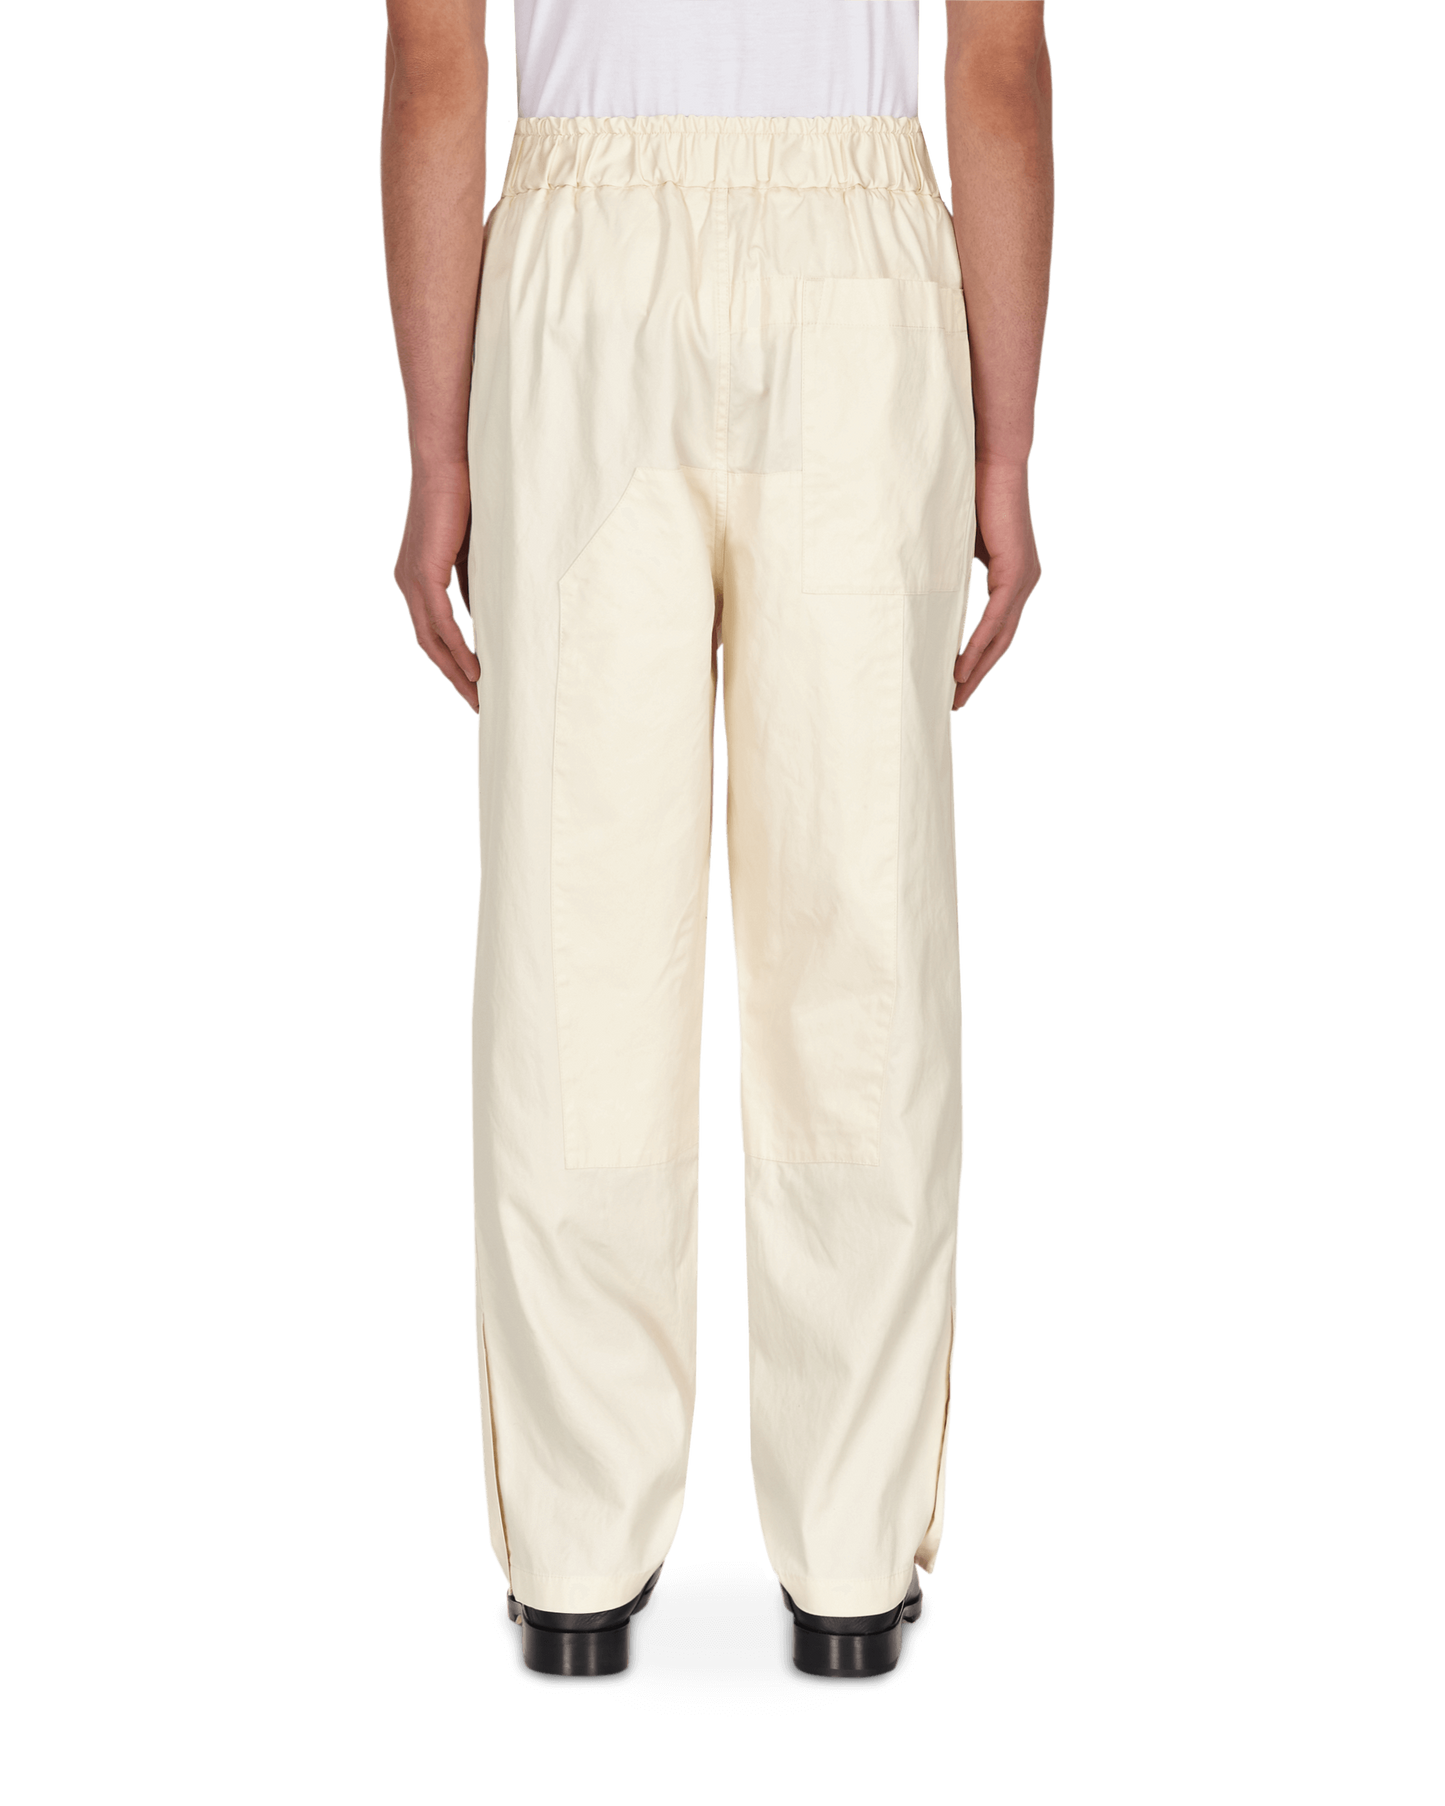 Jil Sander C 02 W Patches Cream White Pants Trousers JSMS312018-MS243800 280